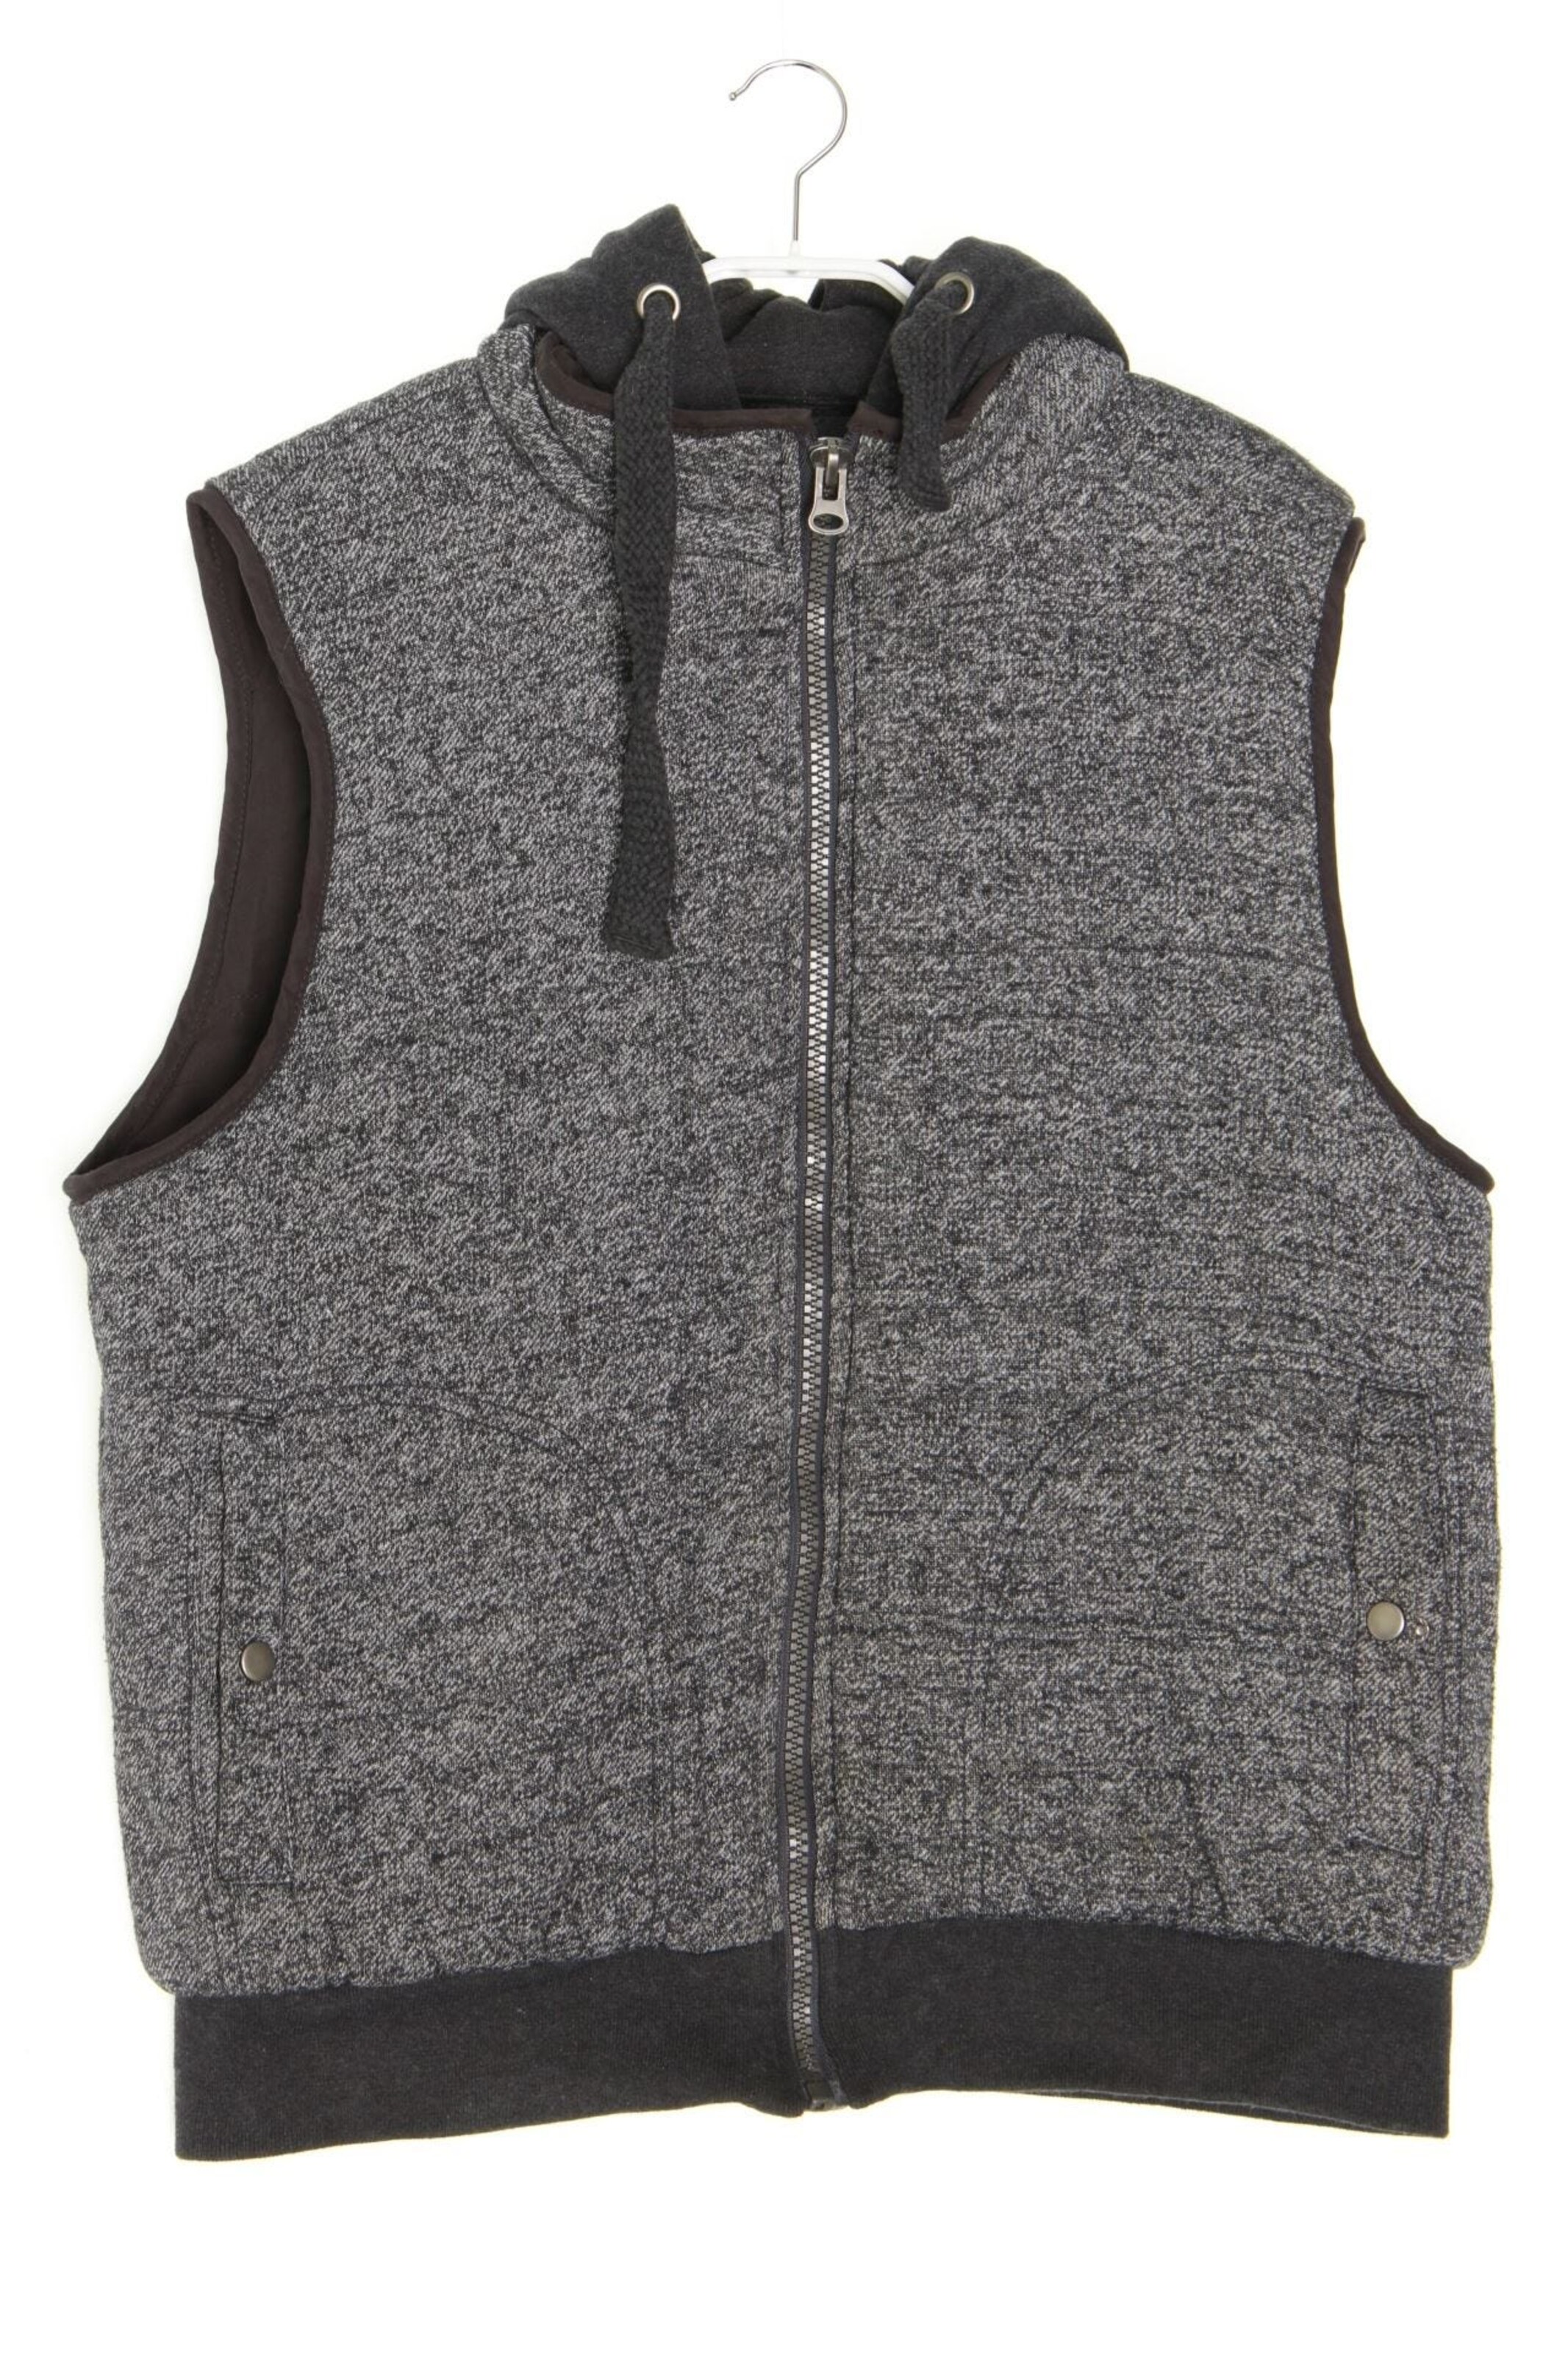 MEN FASHION Jumpers & Sweatshirts Sports discount 70% Black XS Cedarwood state sweatshirt 